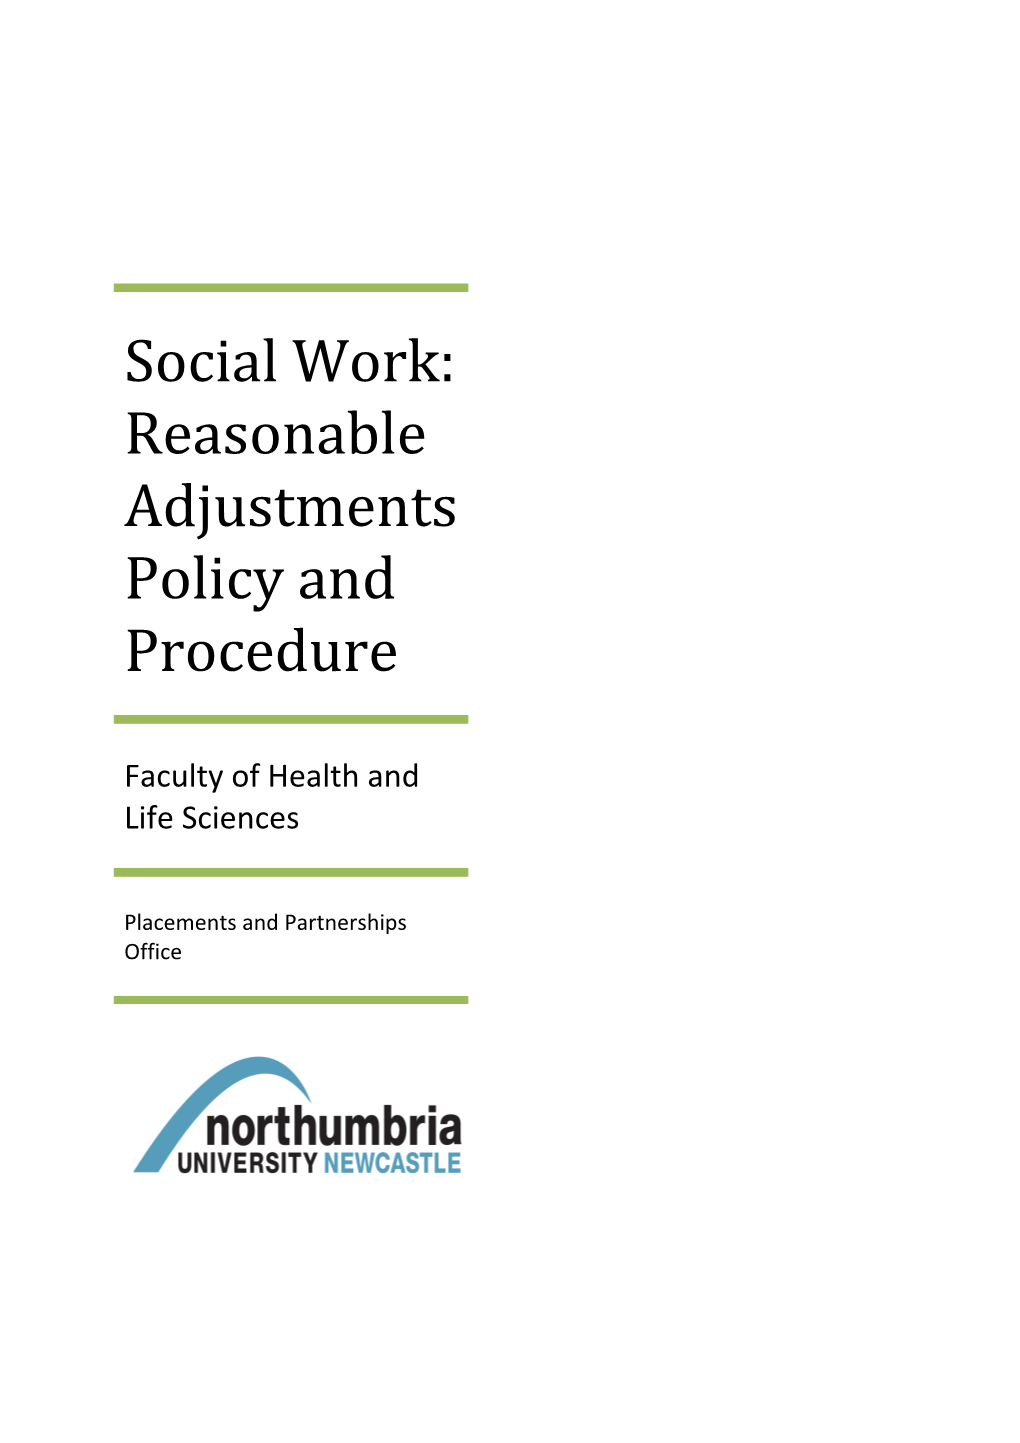 Social Work: Reasonable Adjustments Policy and Procedure